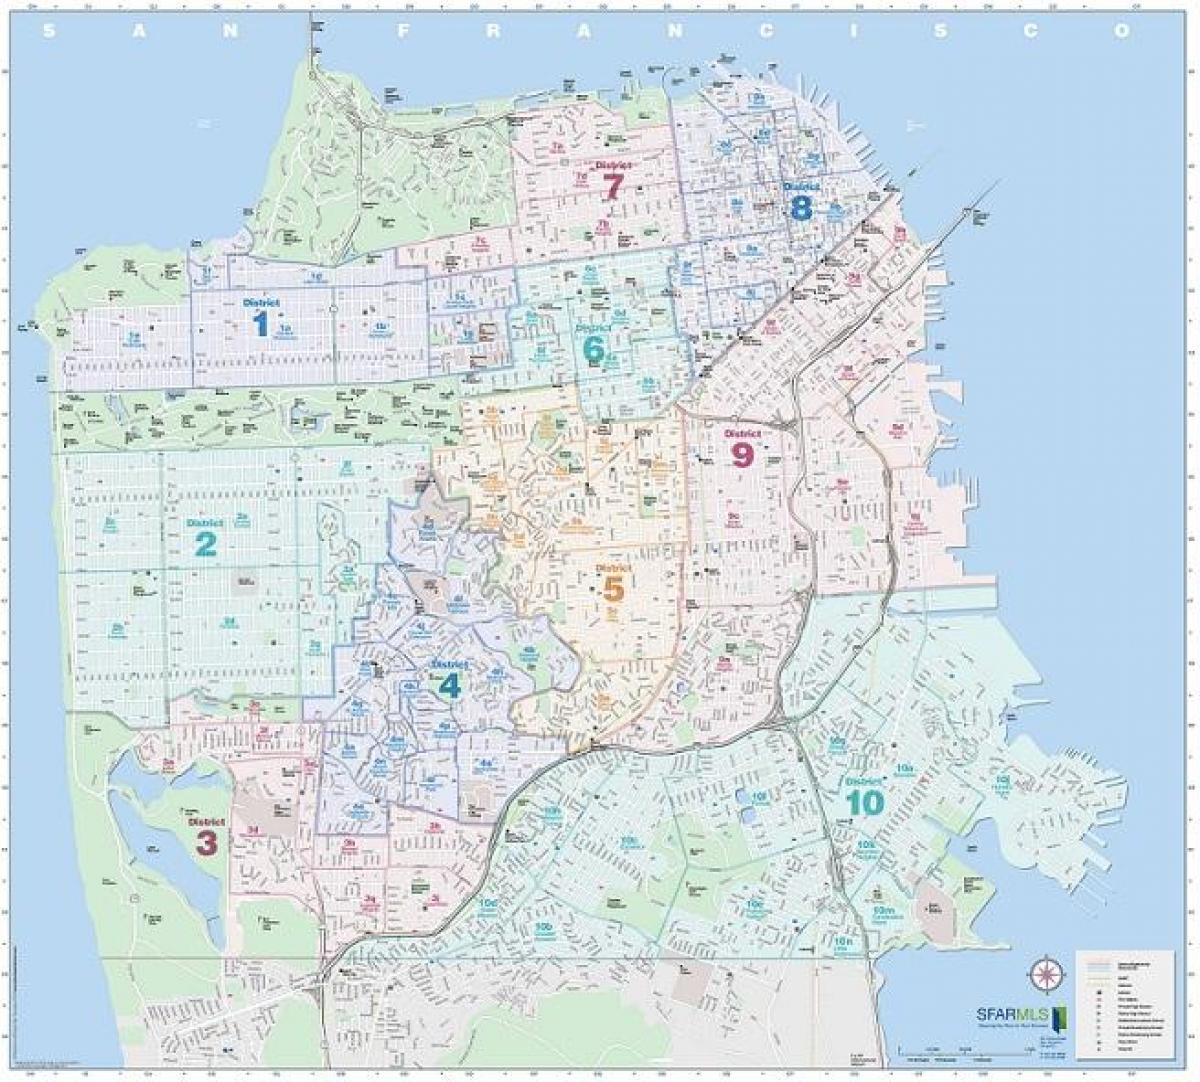 San Francisco de la mls mapa